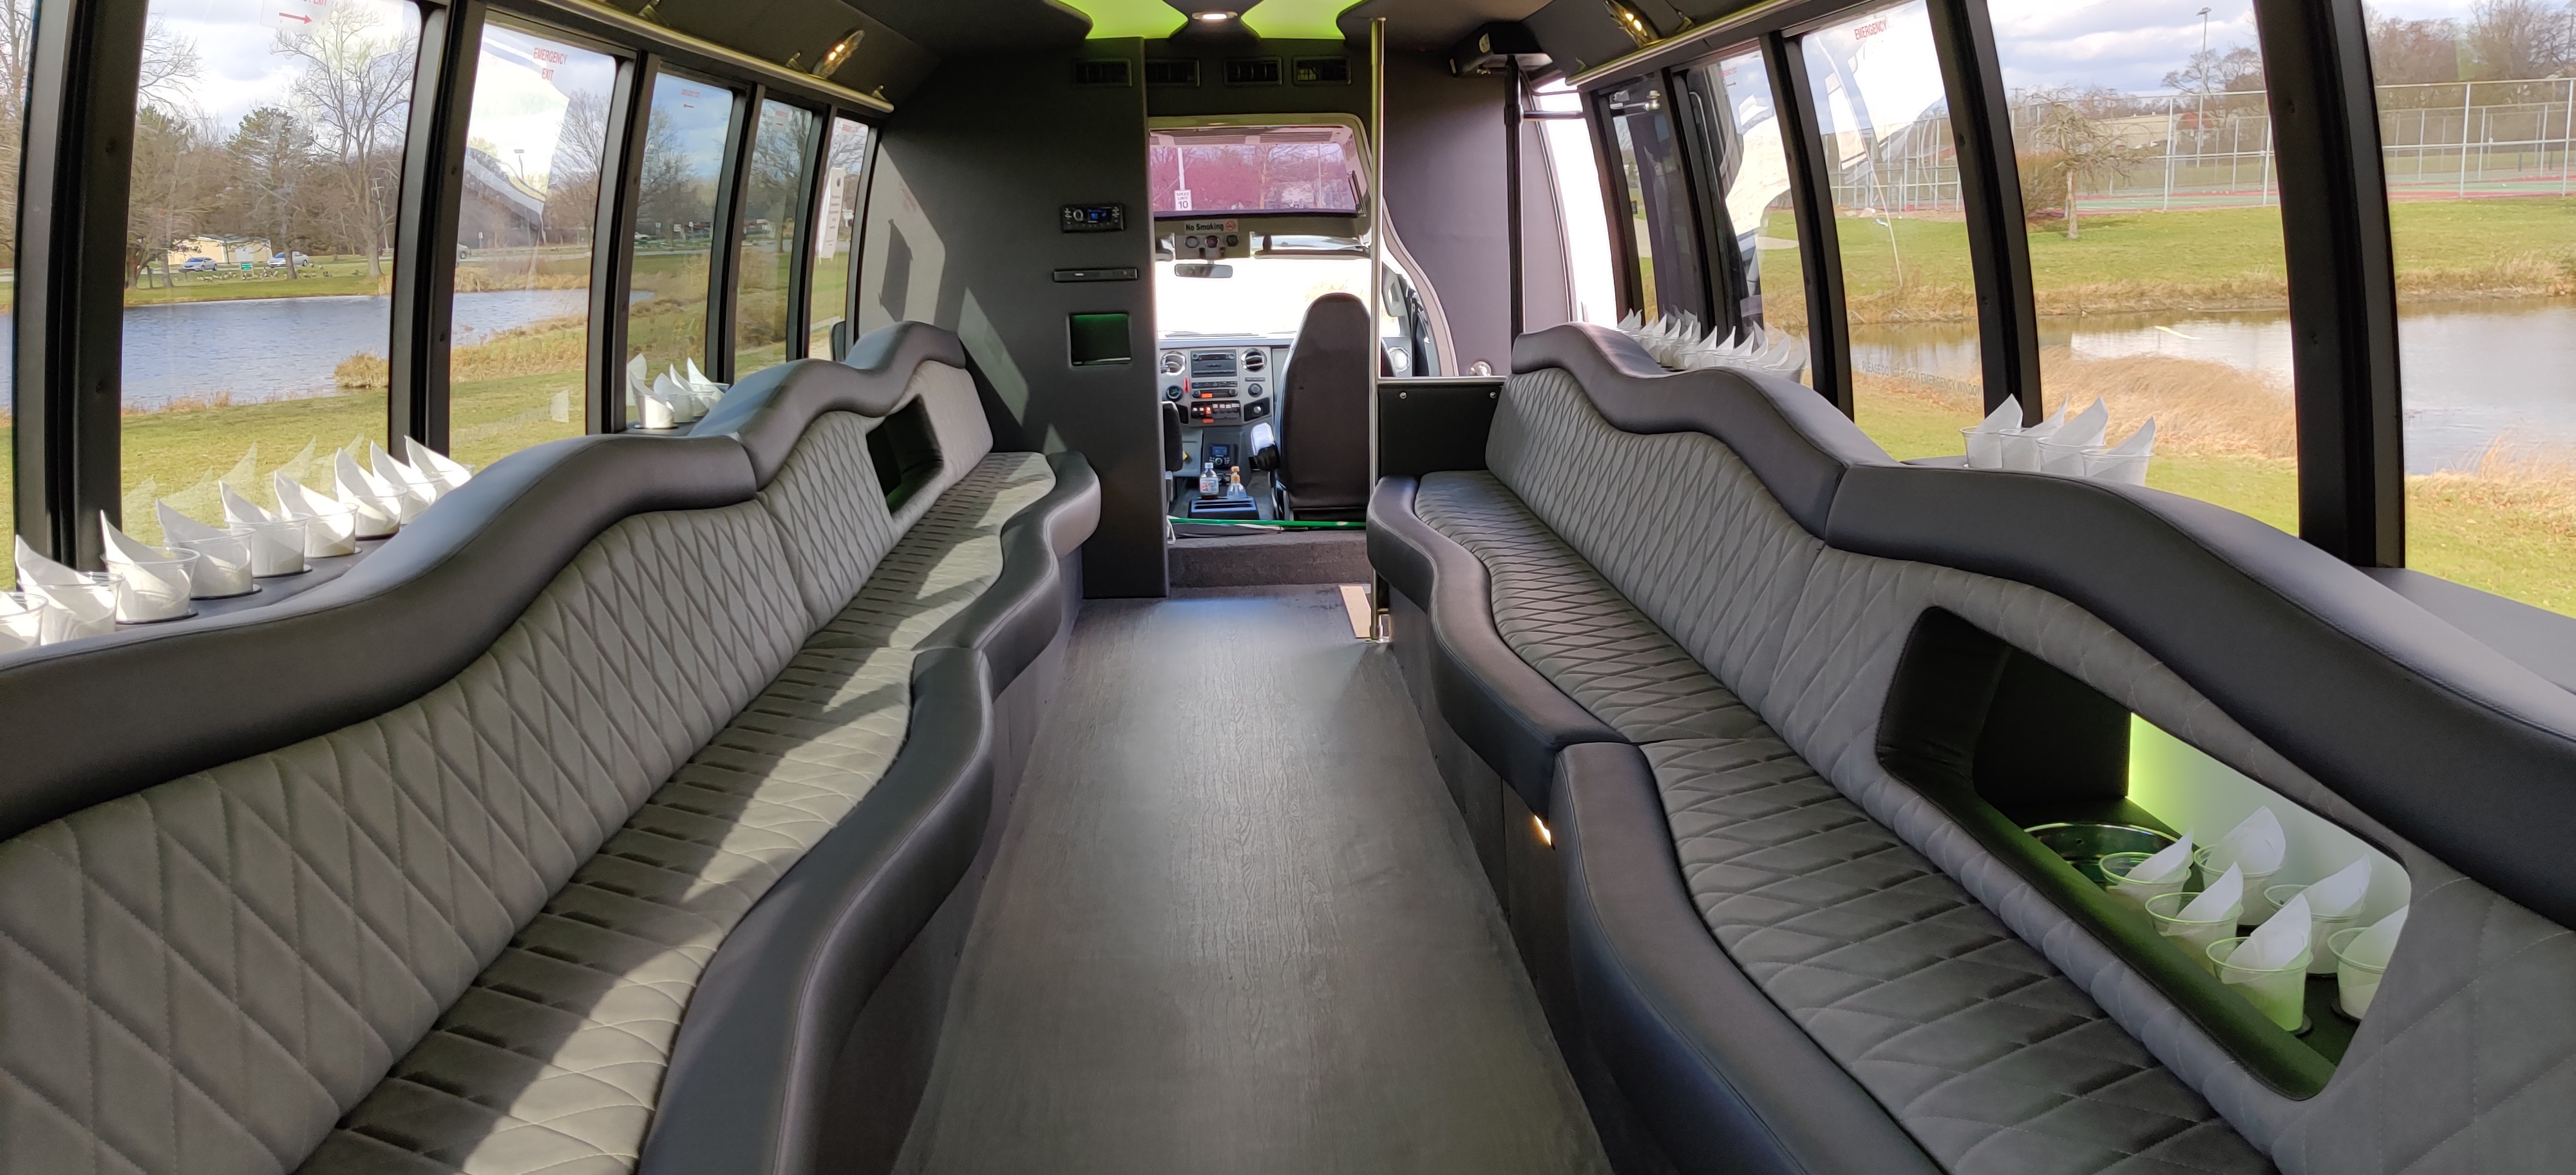 28-2 Passenger Luxury Limo Bus Interior 4